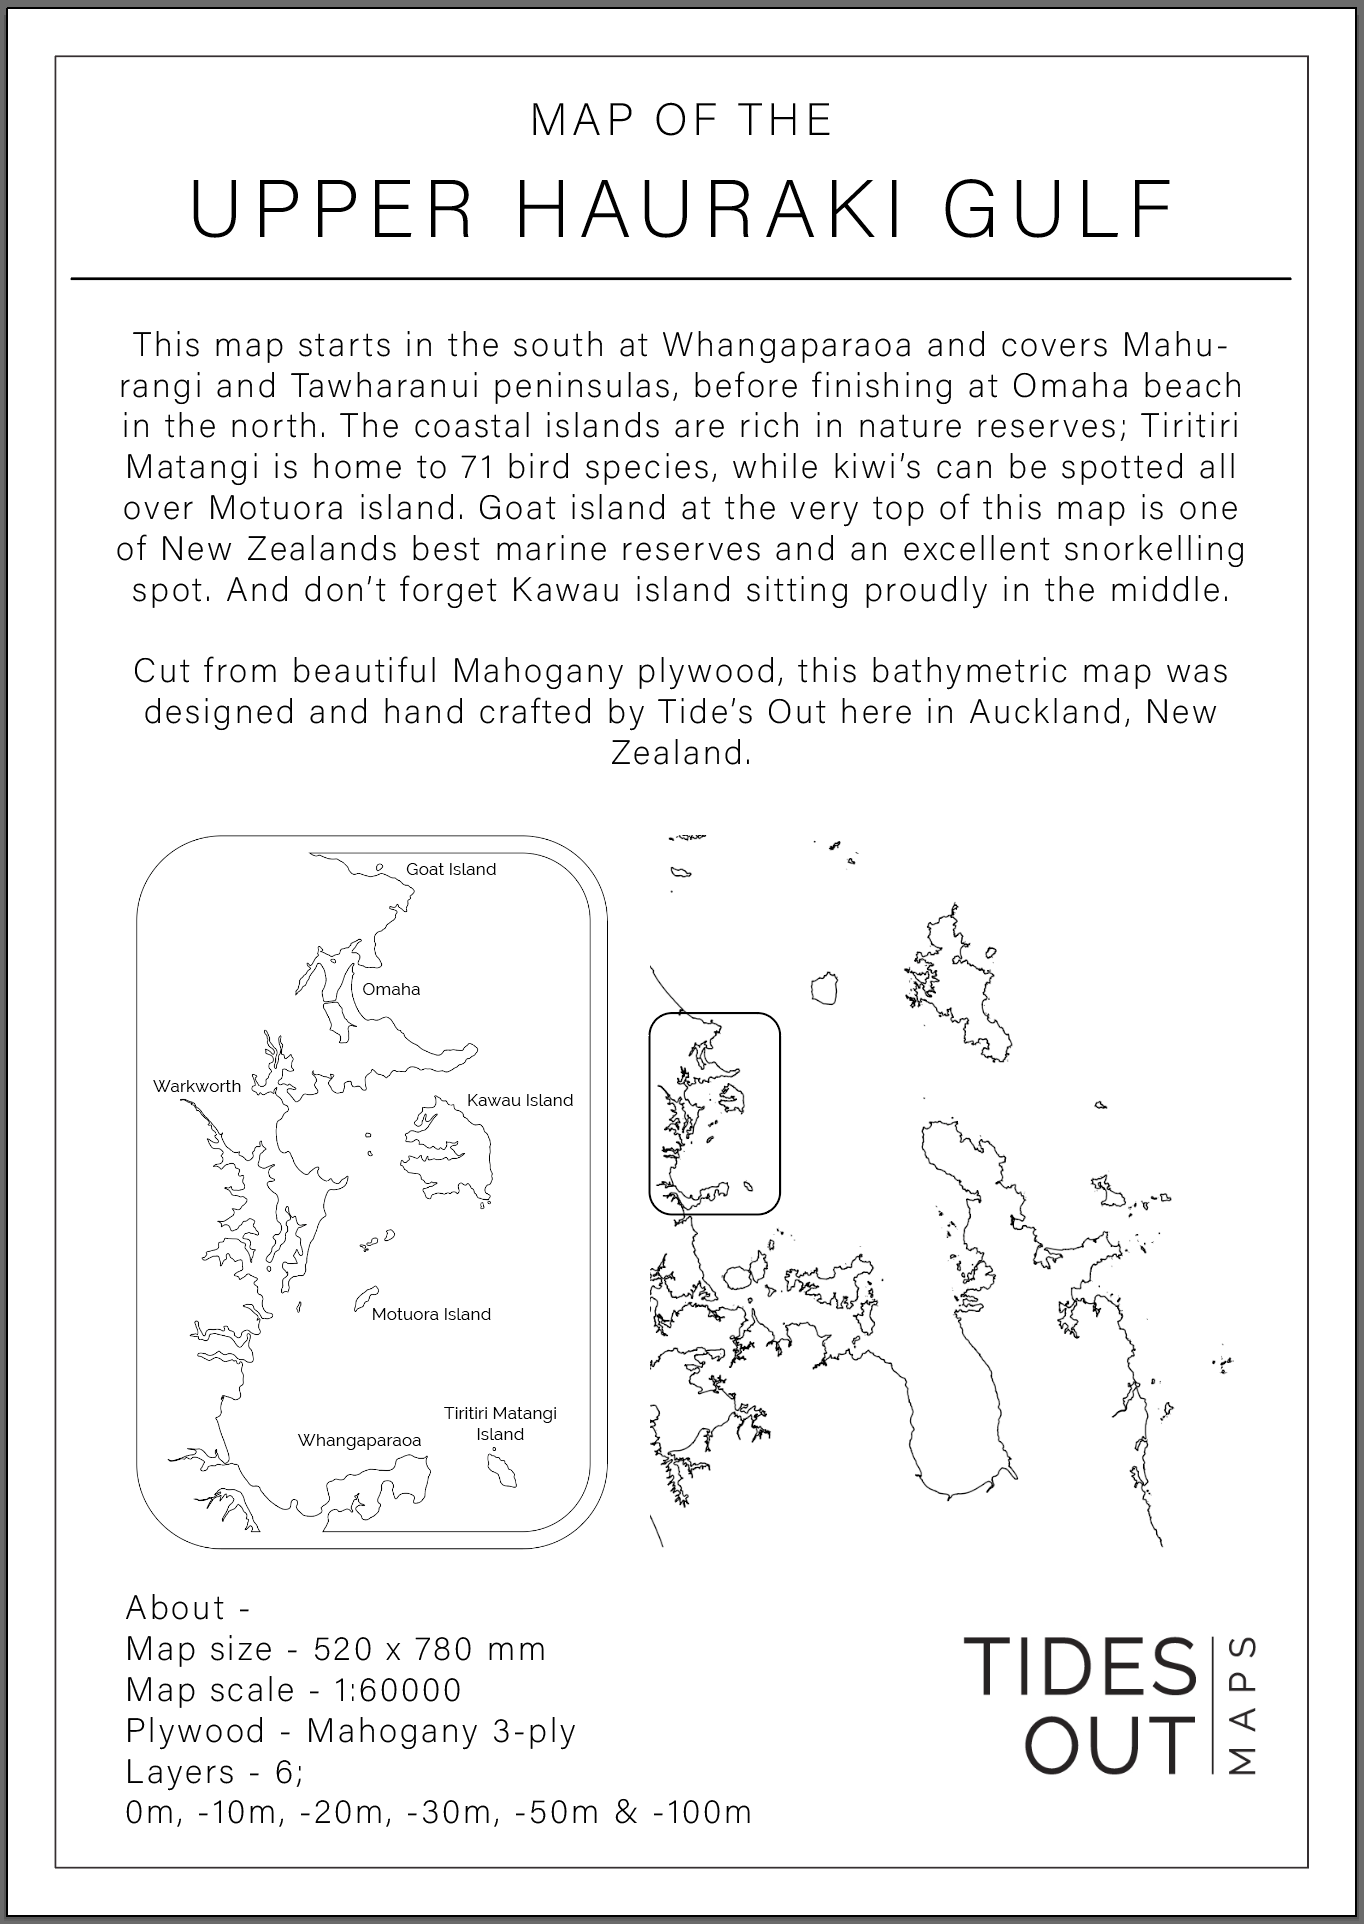 Upper Hauraki Gulf - Tide's Out Maps